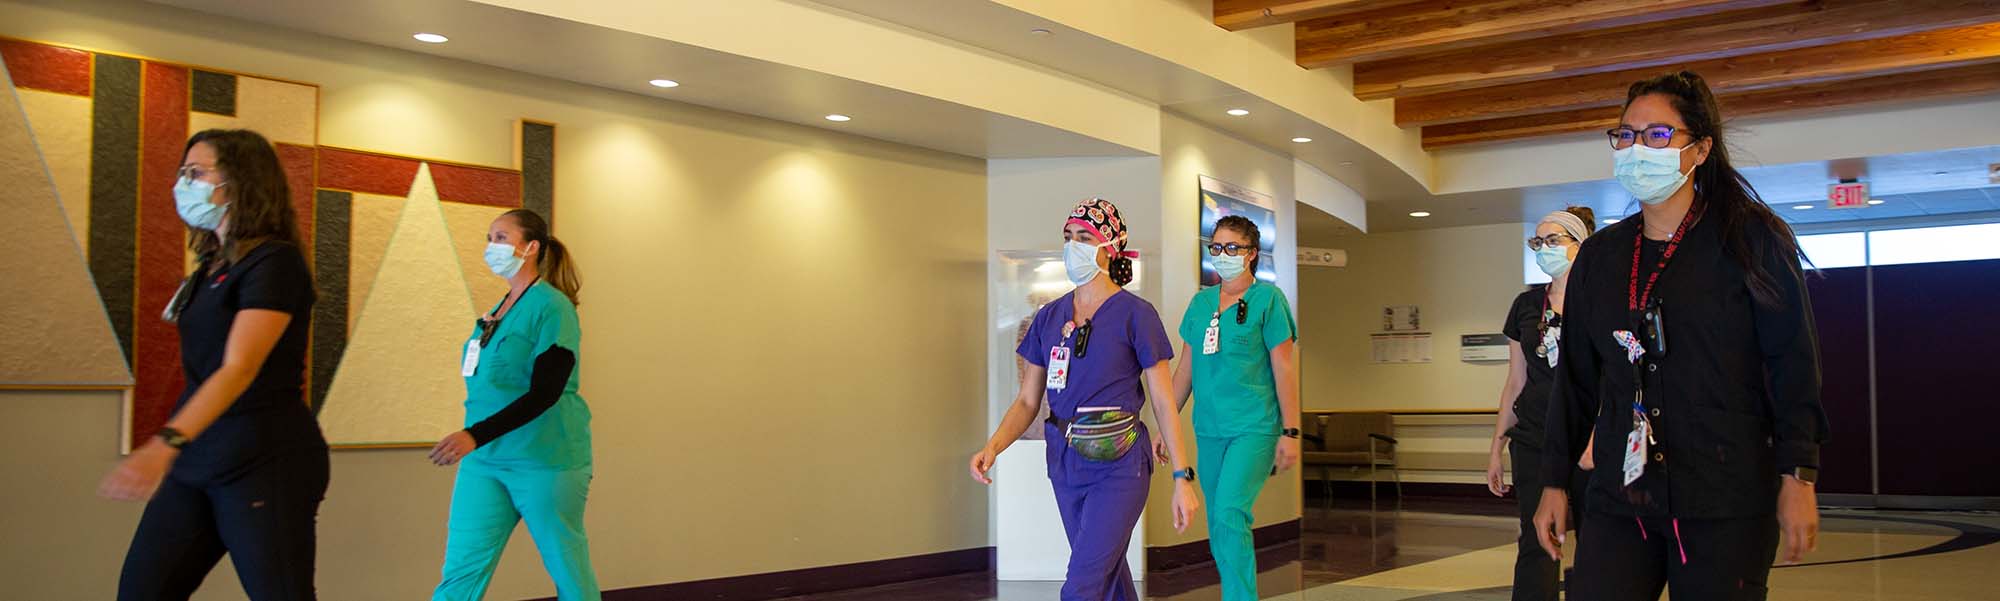 UNM nurses walking down a hallway